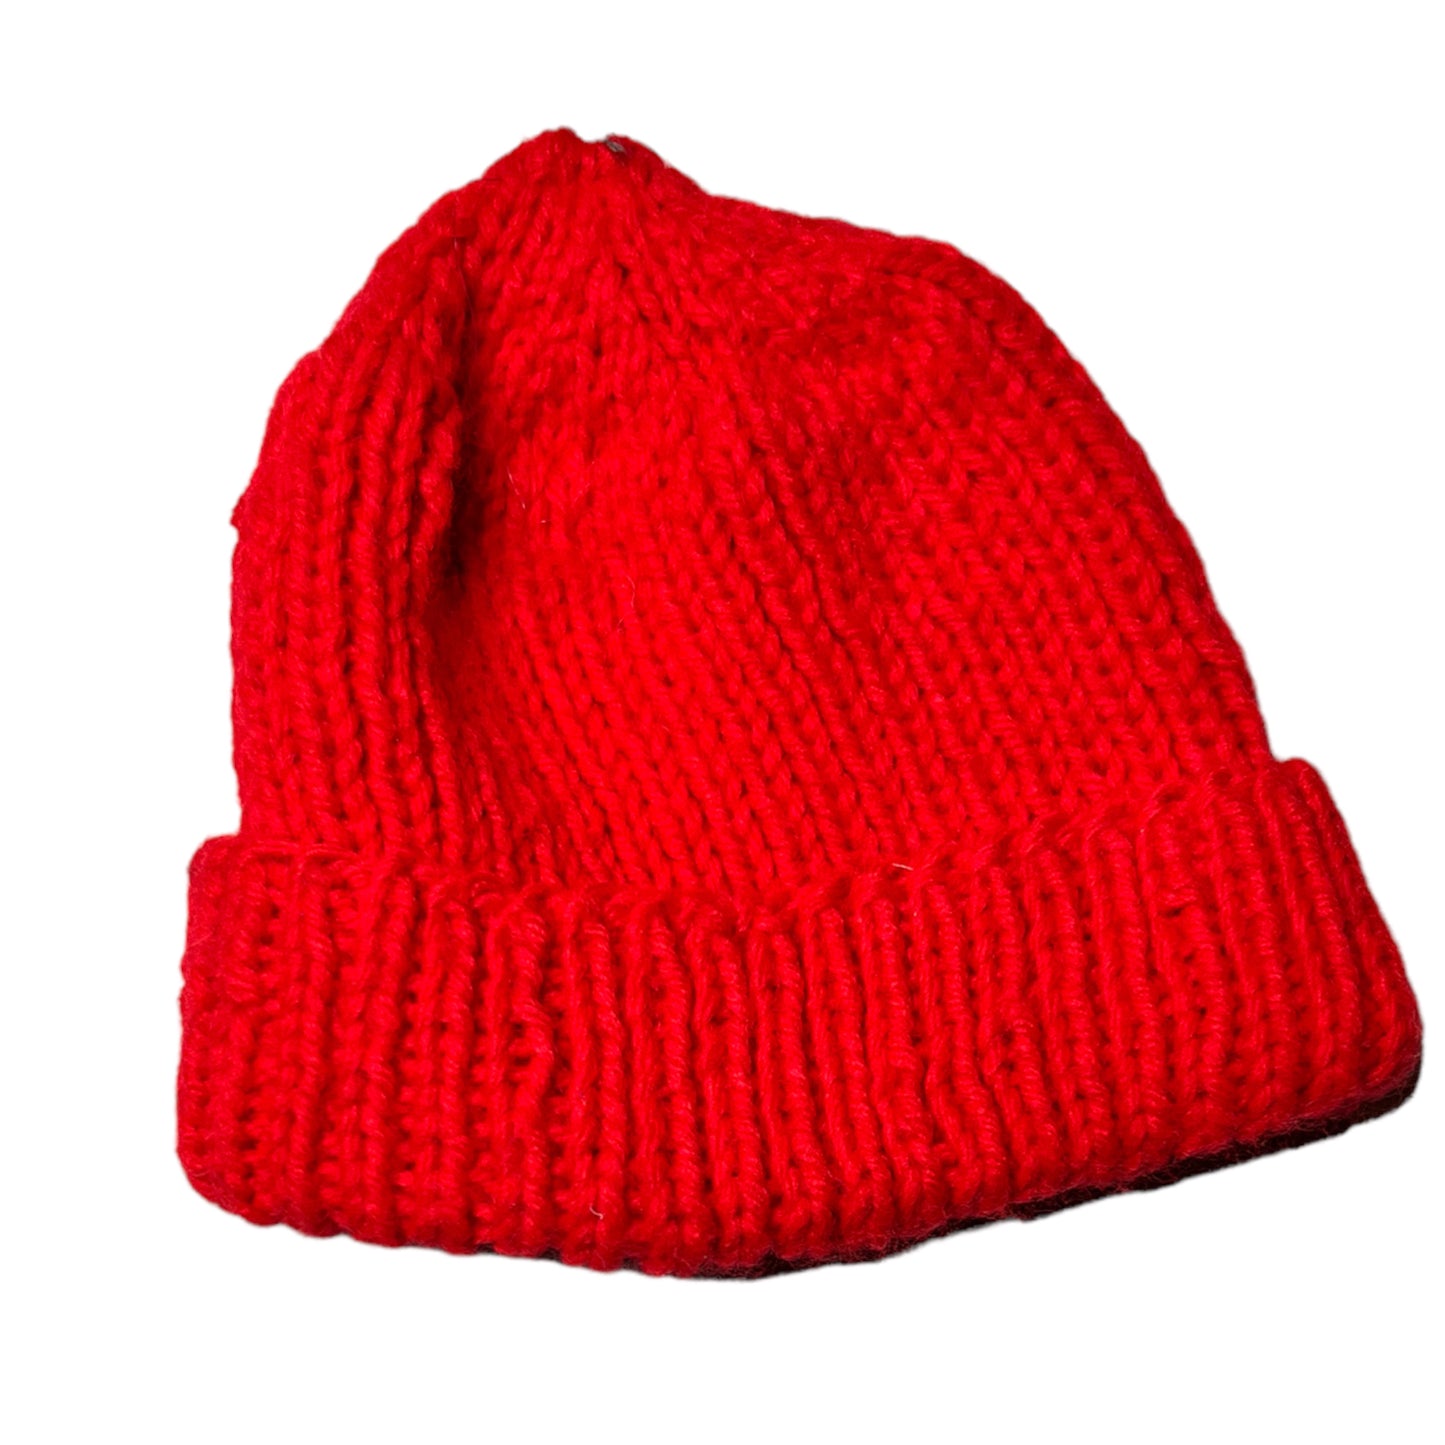 1/2 red knit fleece toque